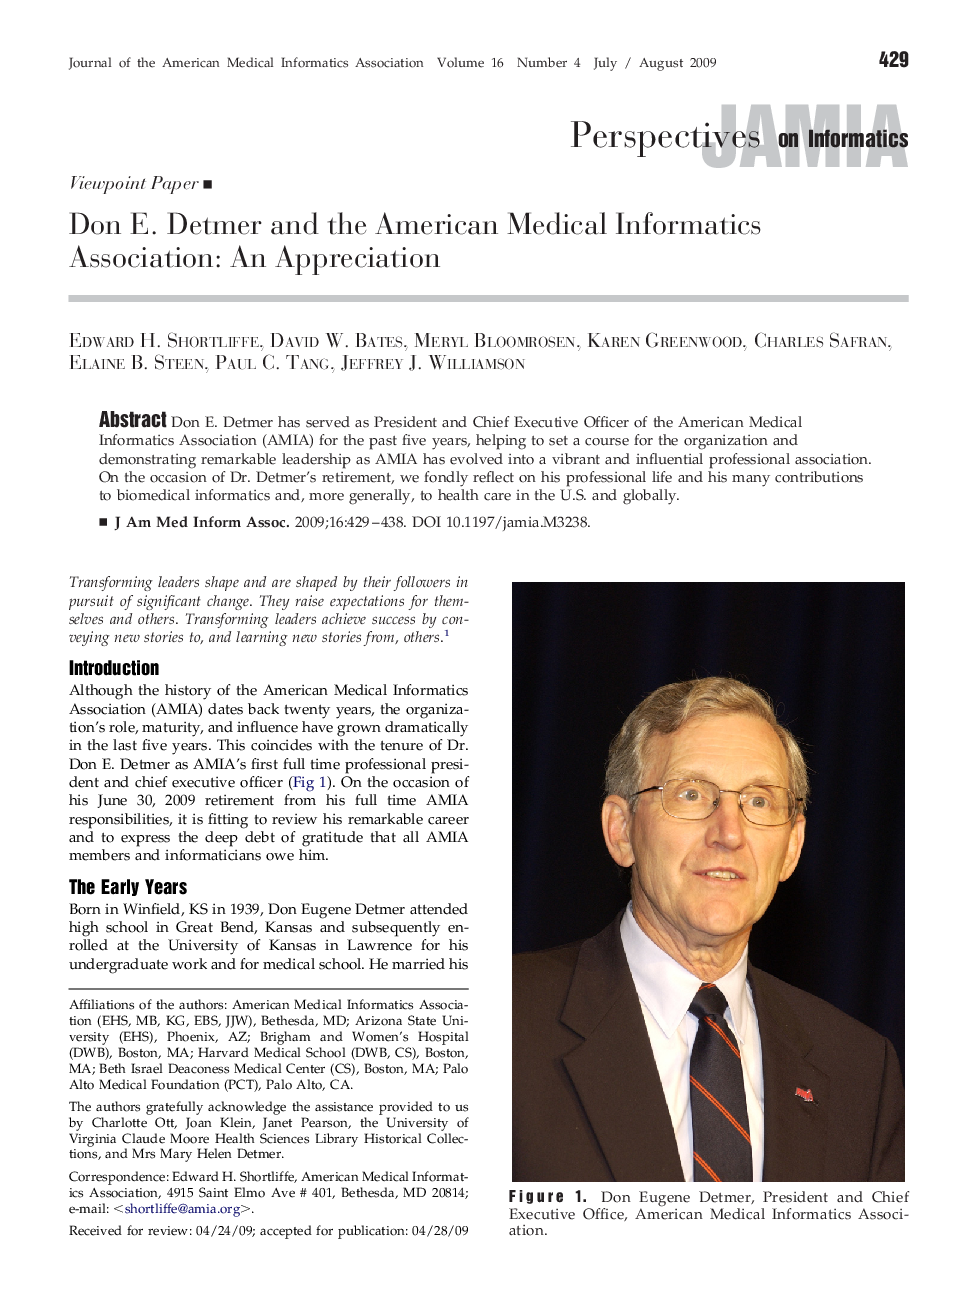 Don E. Detmer and the American Medical Informatics Association: An Appreciation